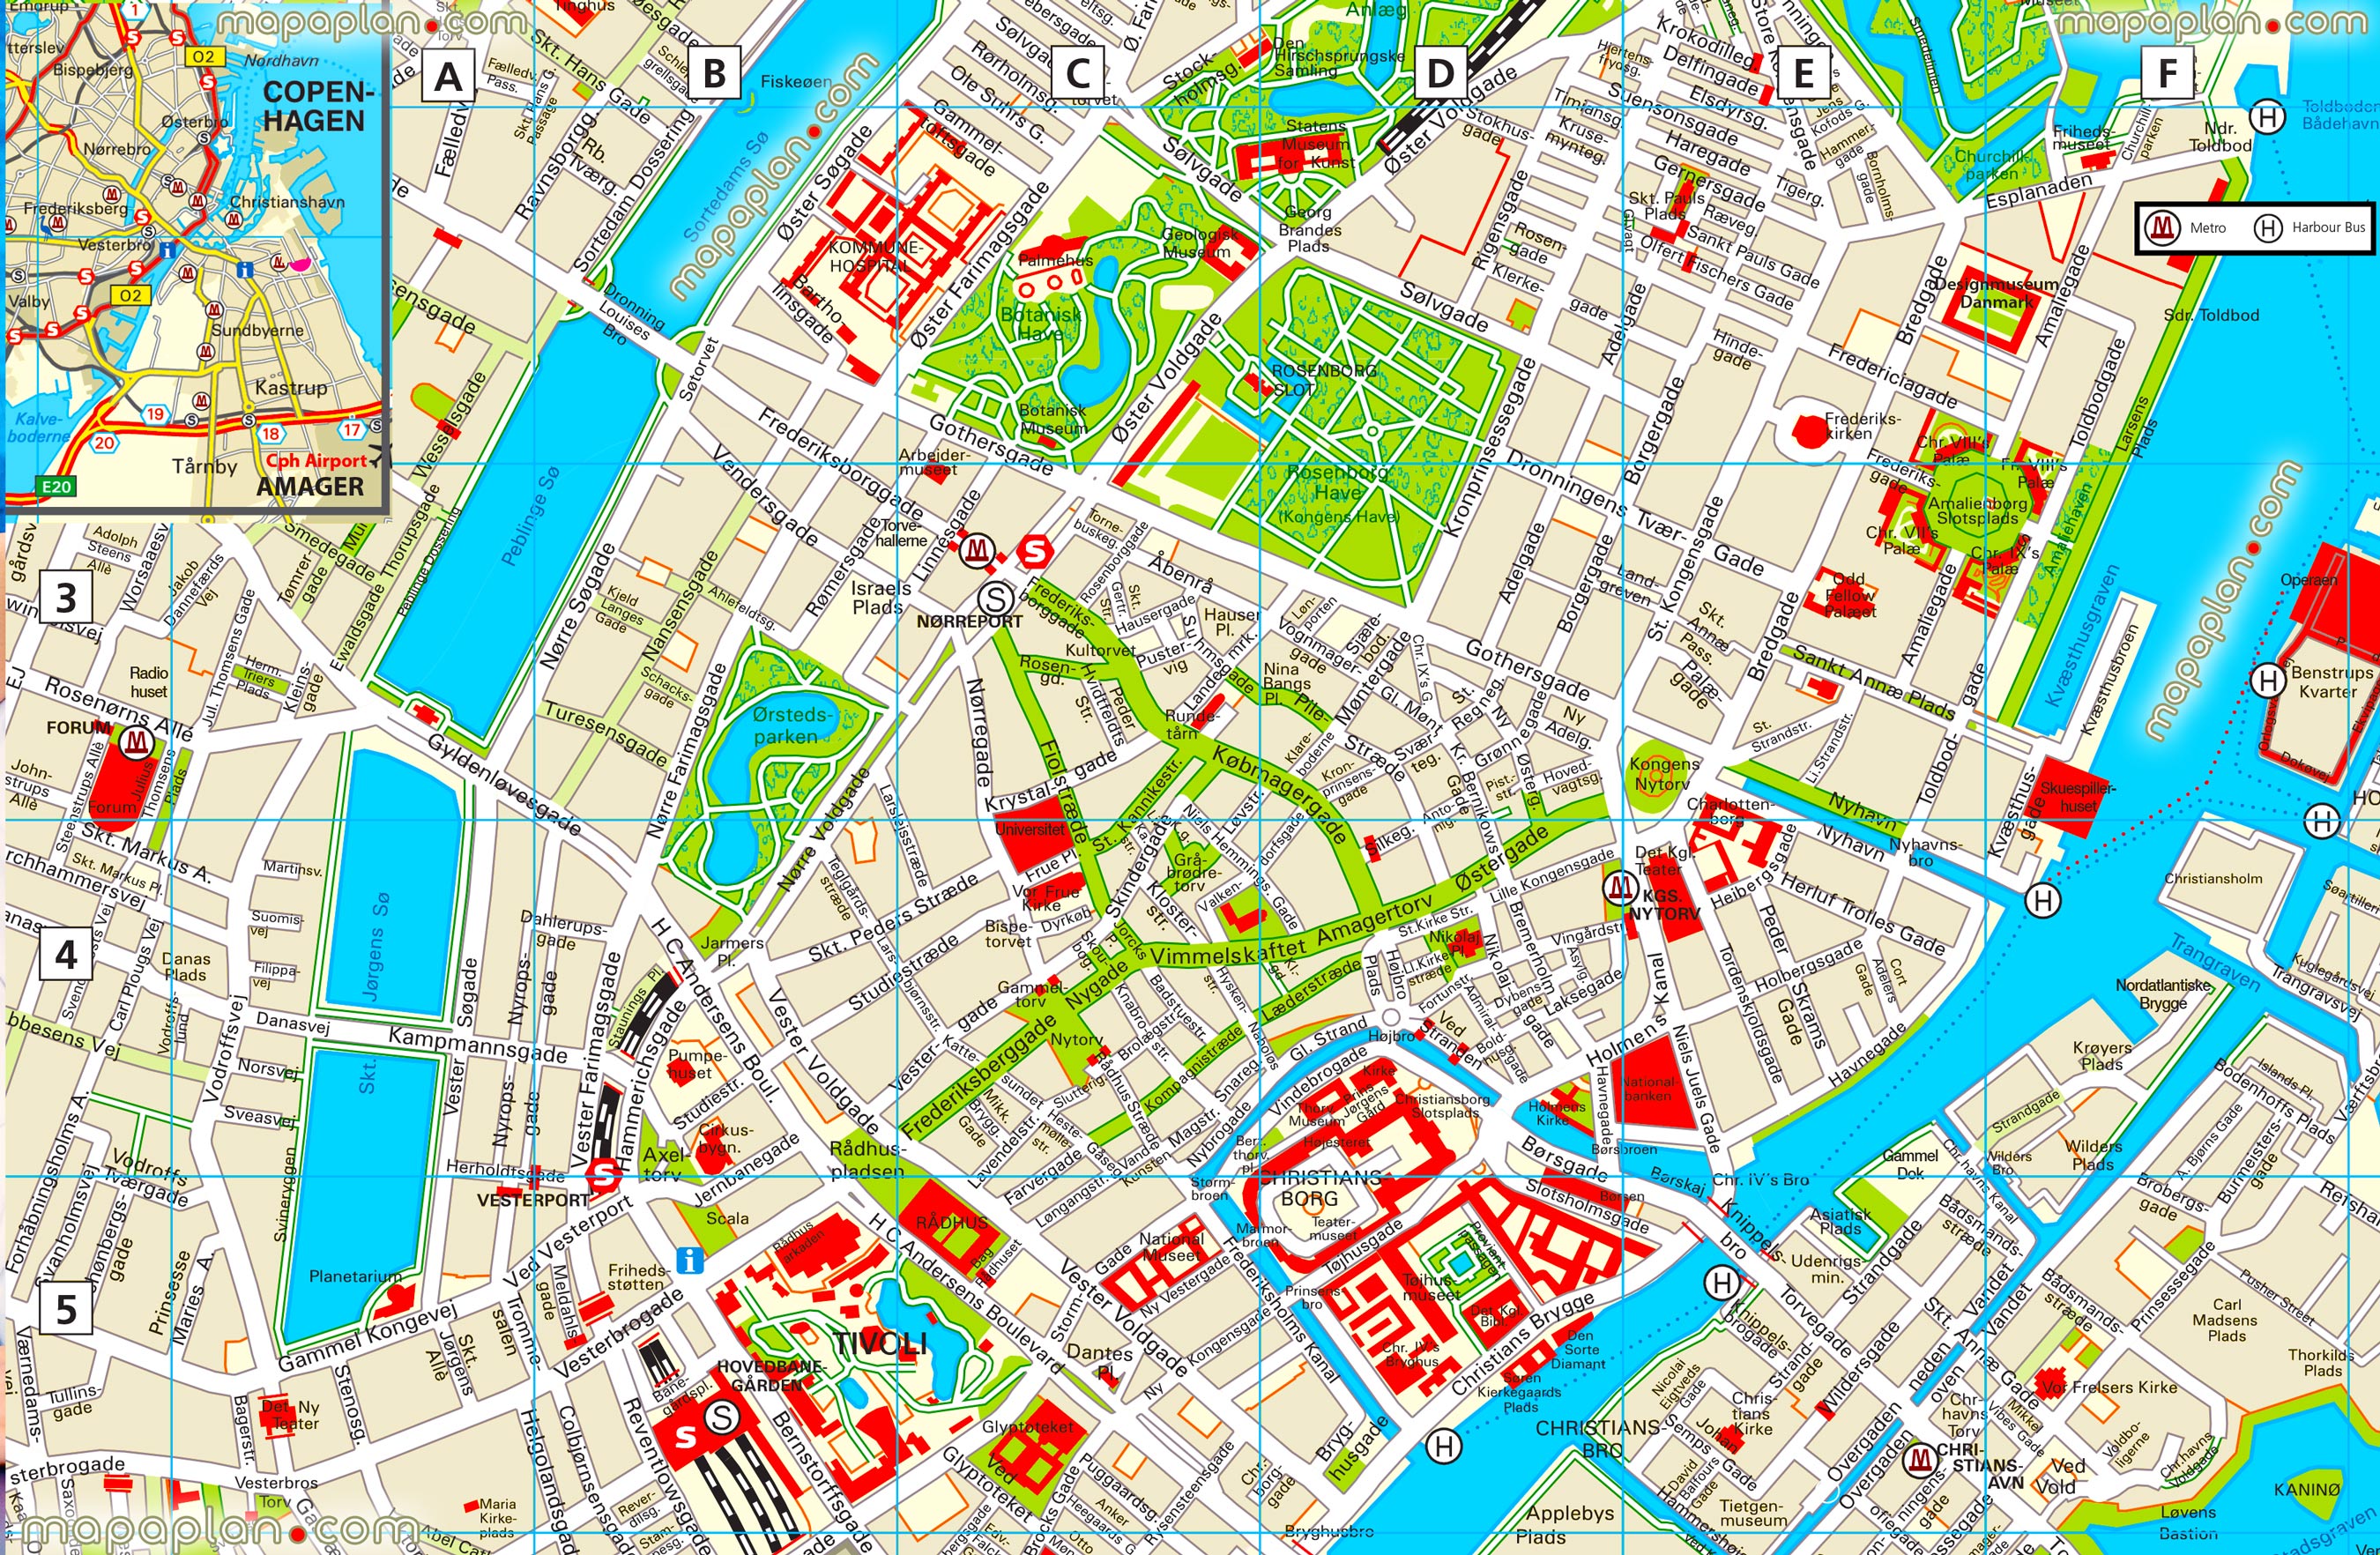 Copenhagen map - Copenhagen printable detailed interactive virtual city